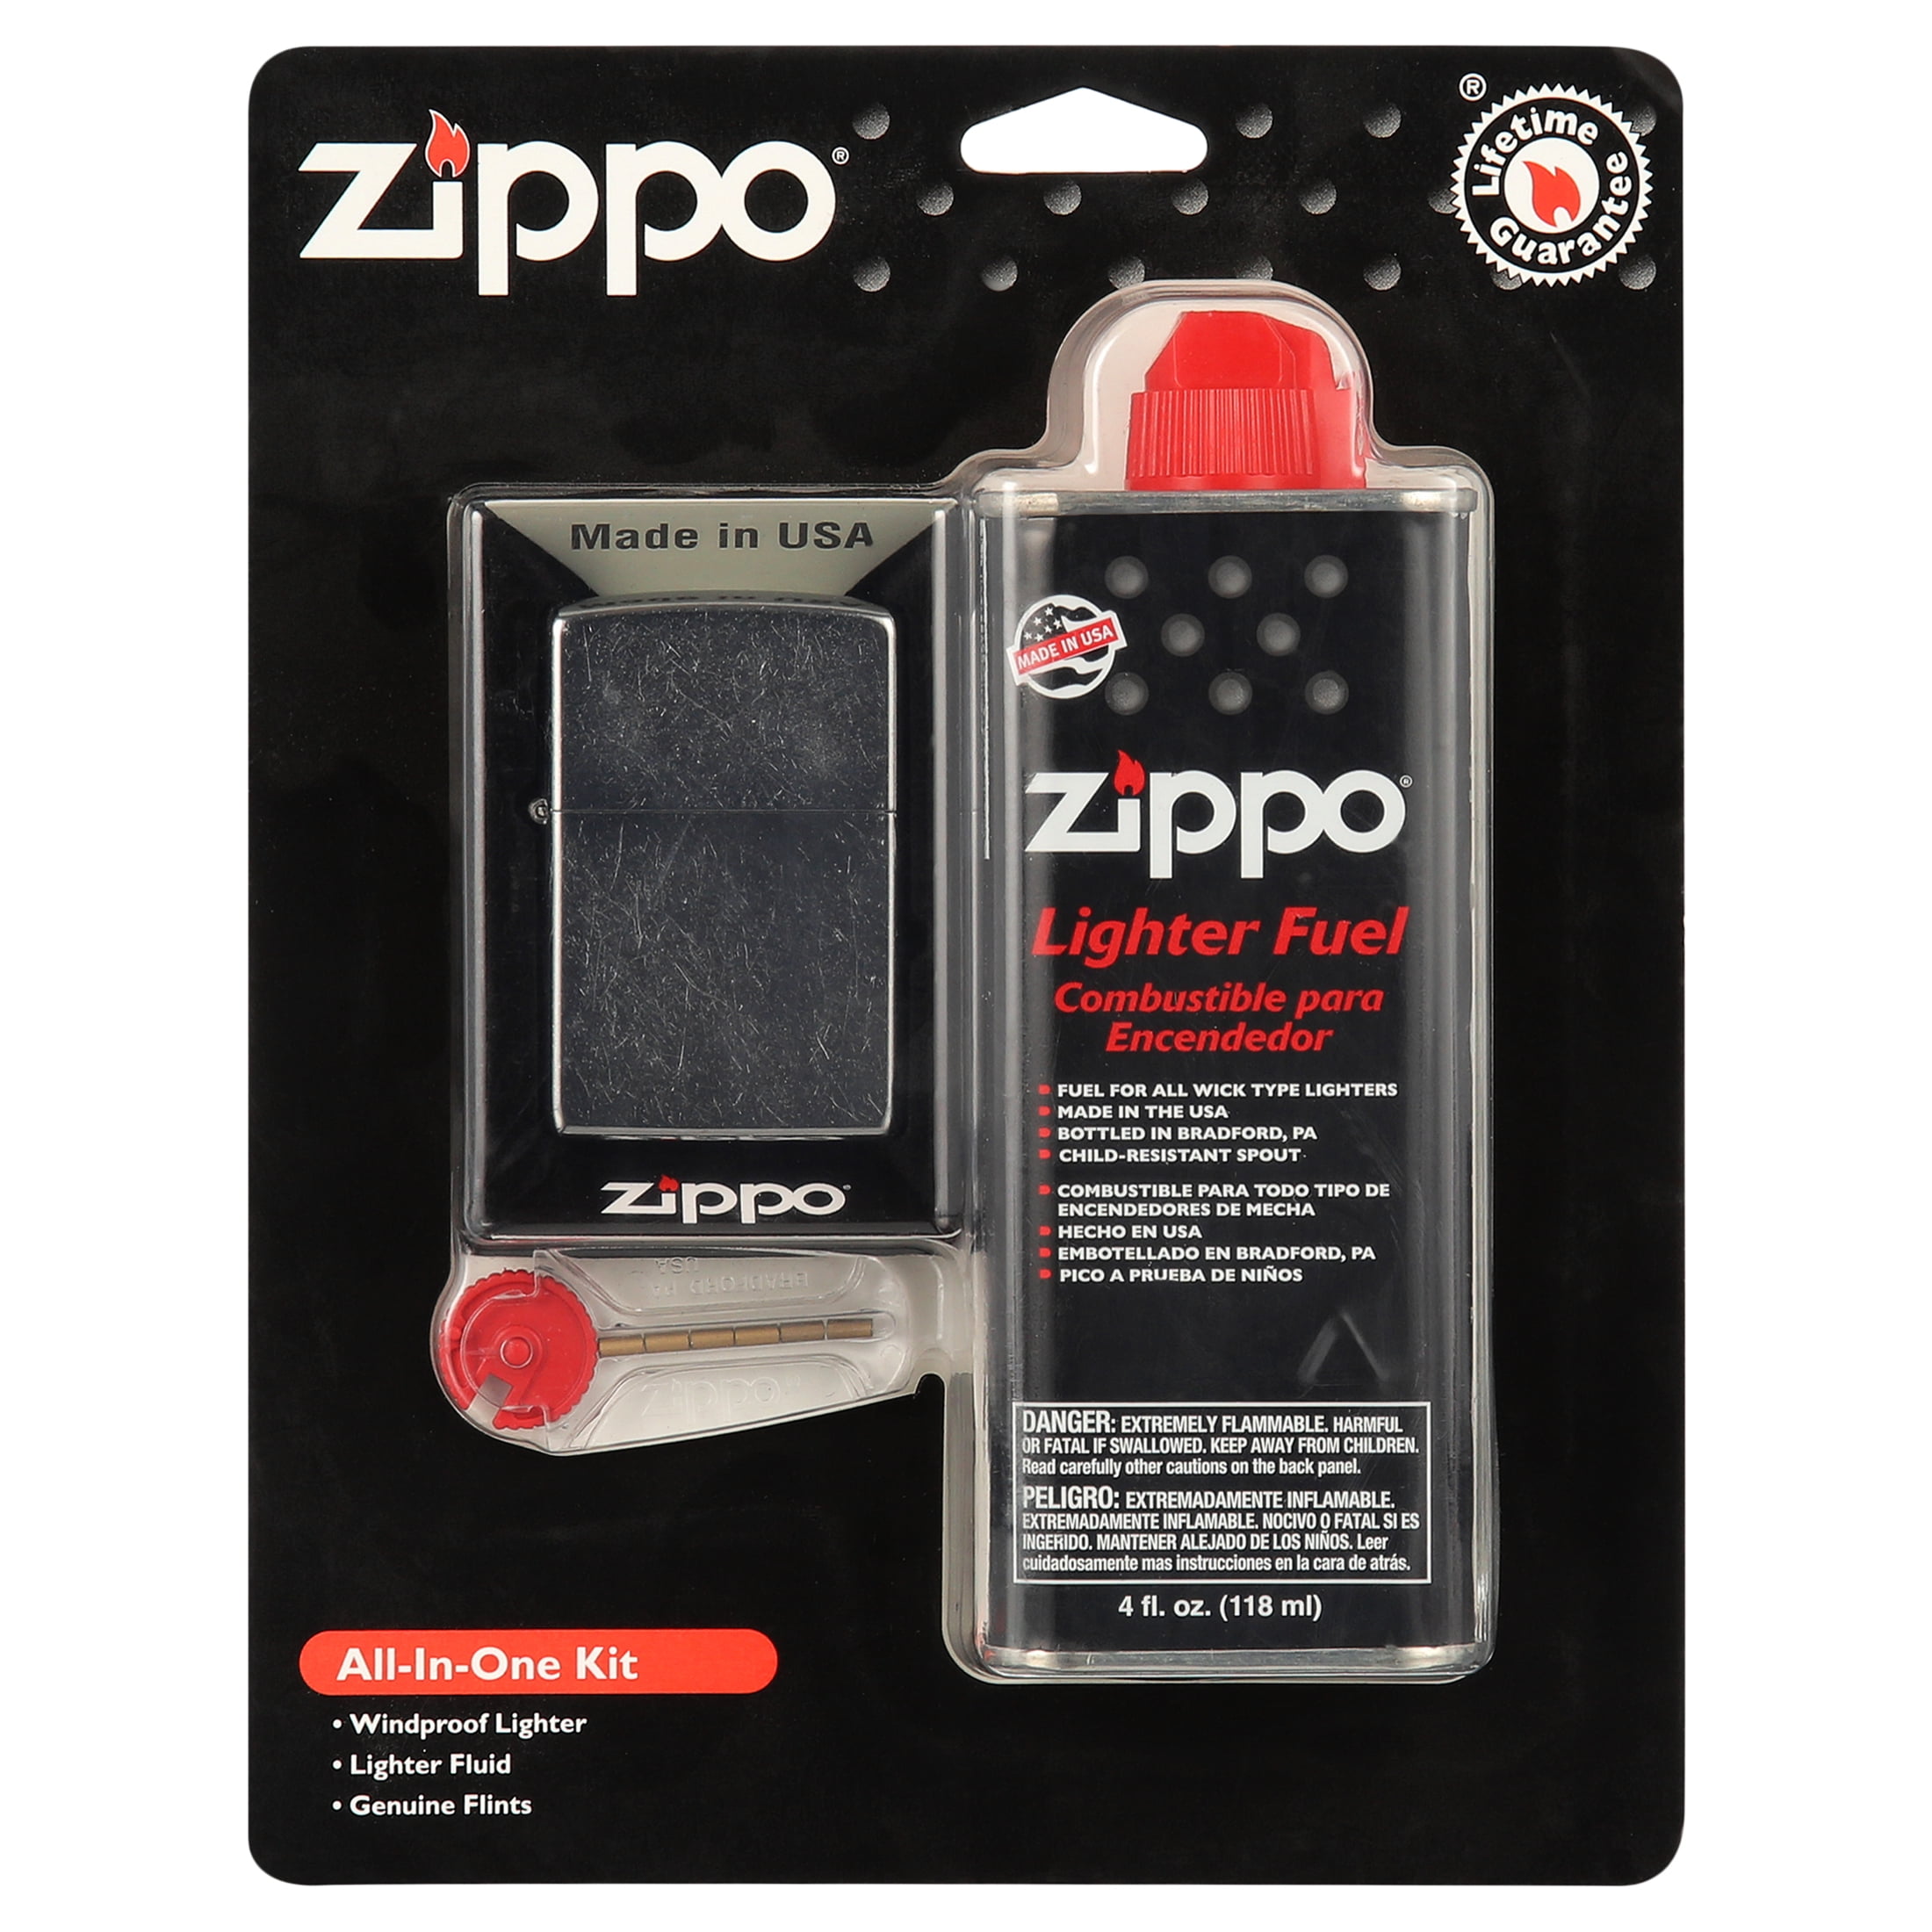 Zippo All-In-One Kit - Walmart.com